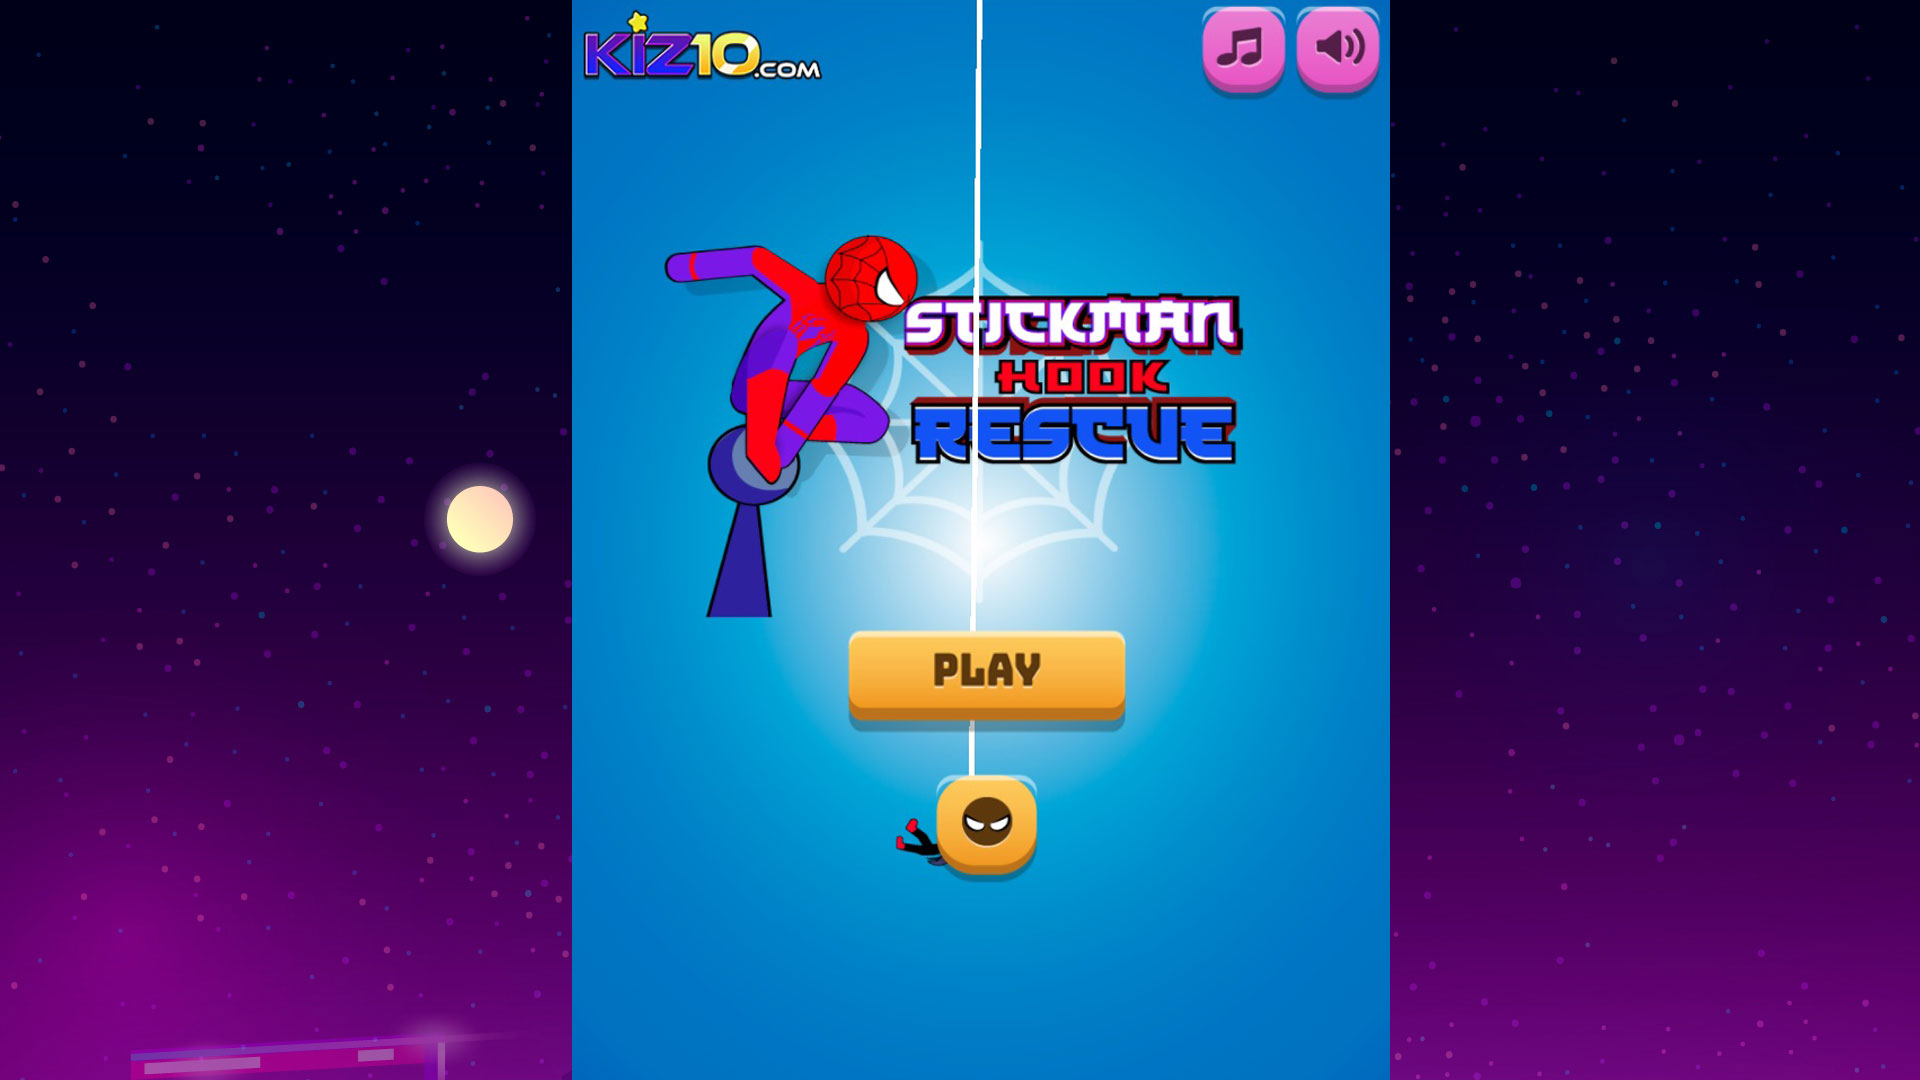 Stickman Hook  Play Online Now